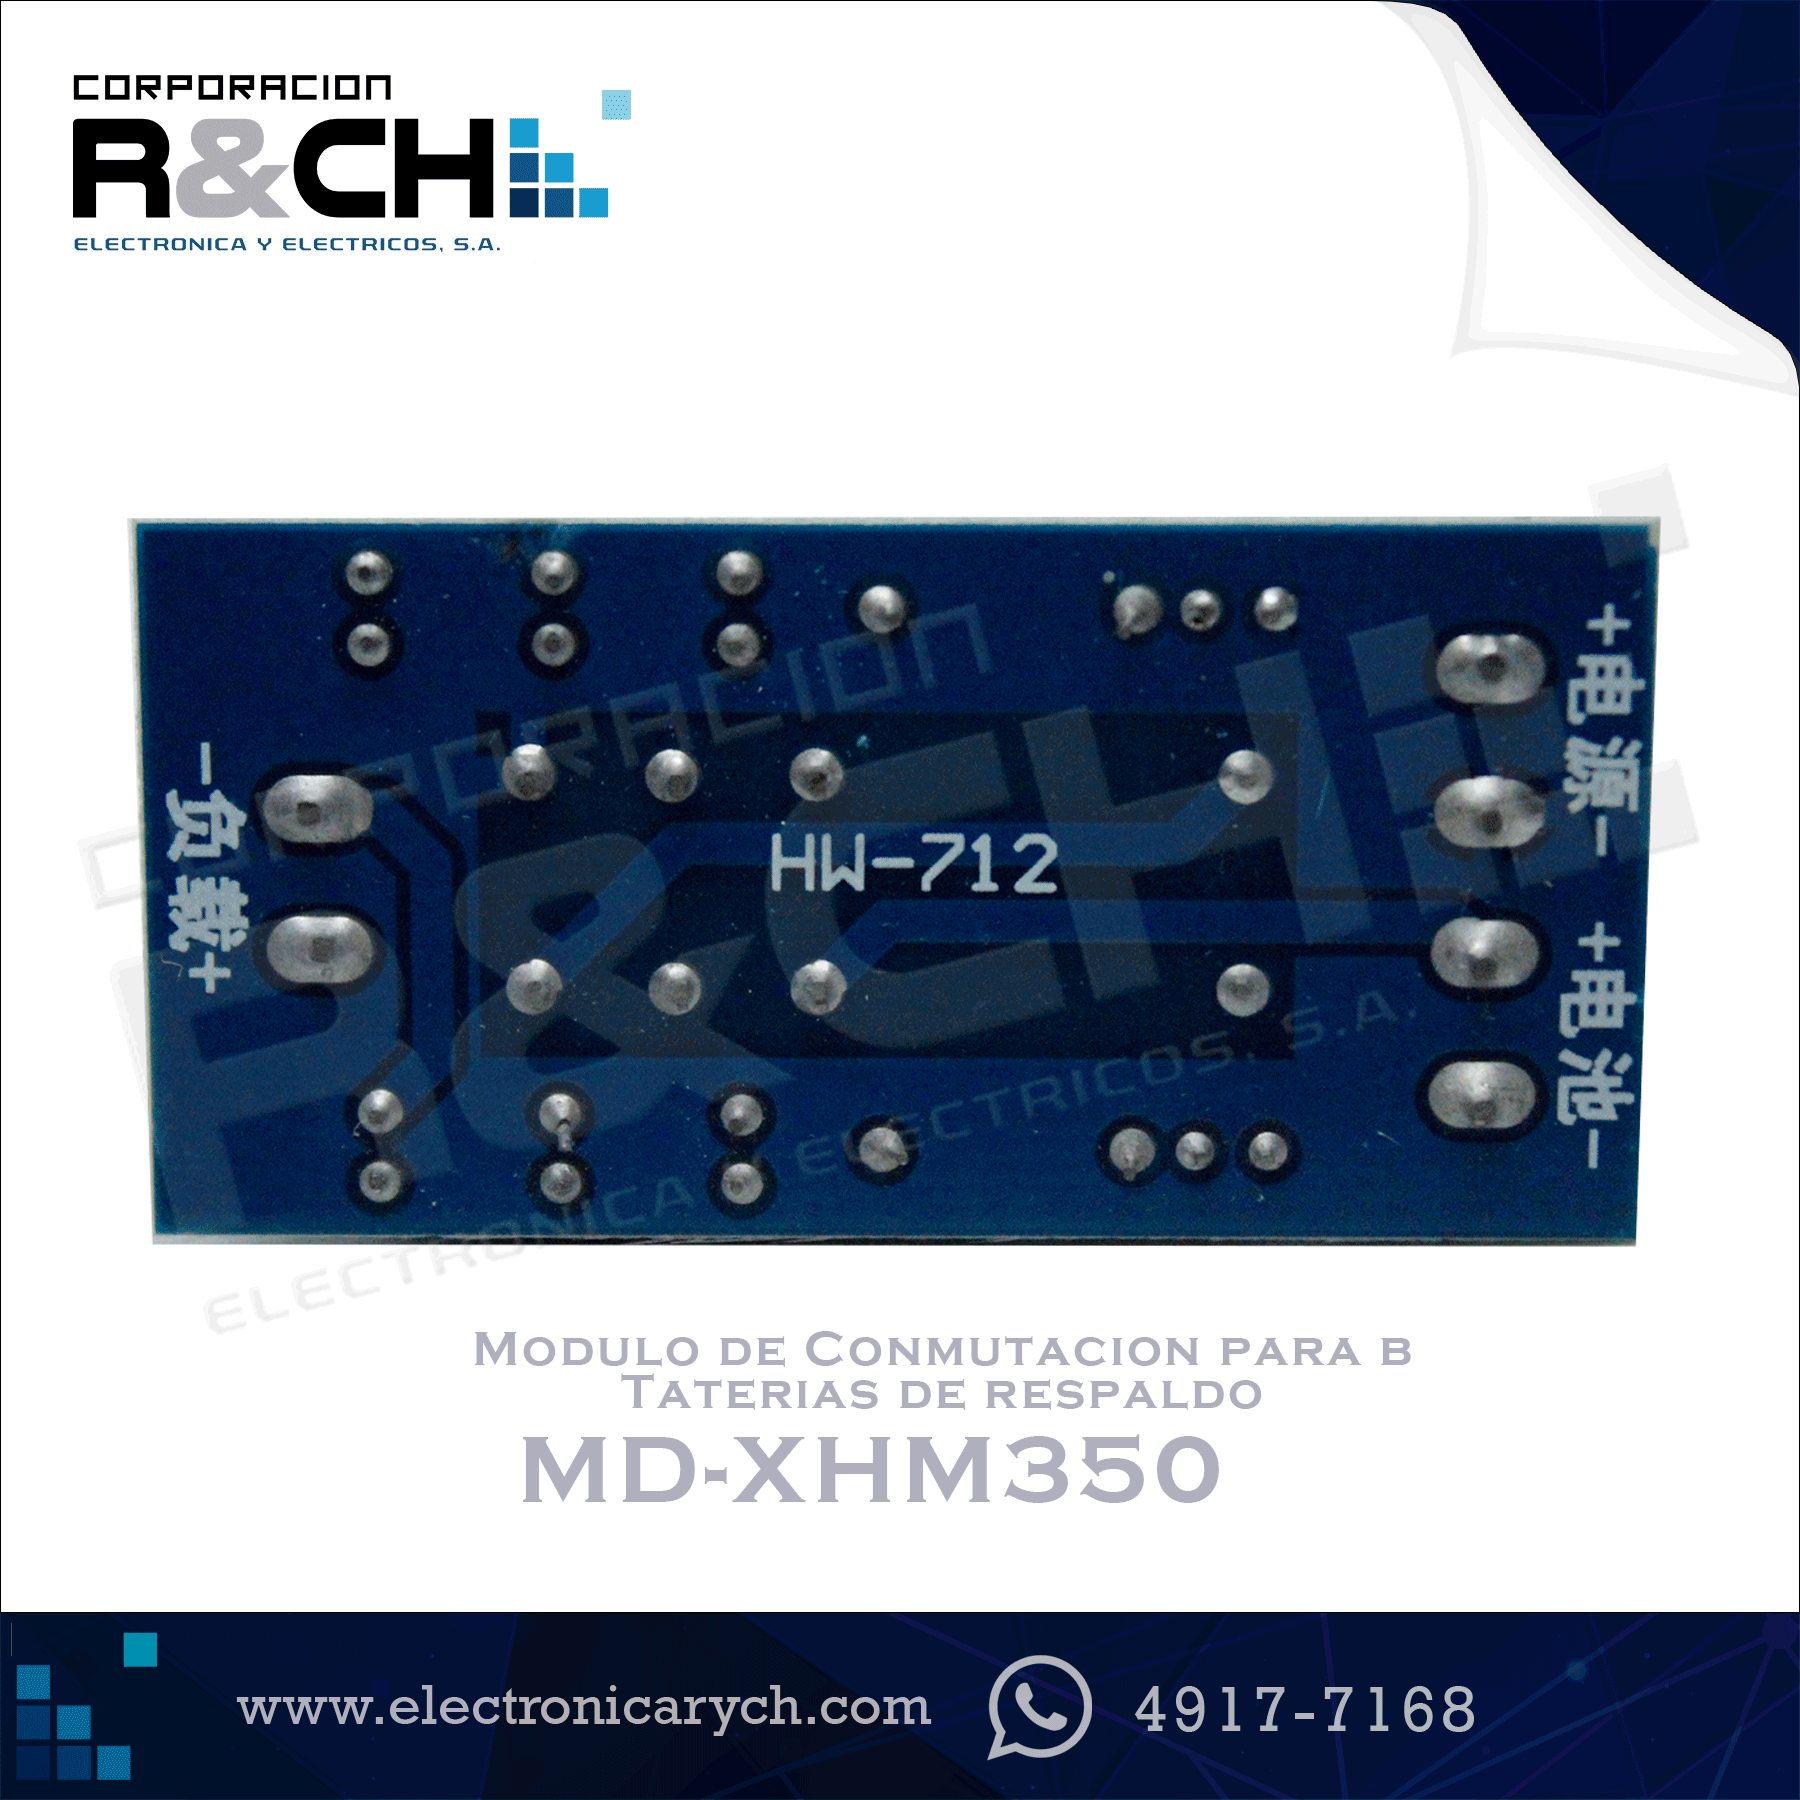 MD-XHM350 Modulo de Conmutacion para baterias de respaldo